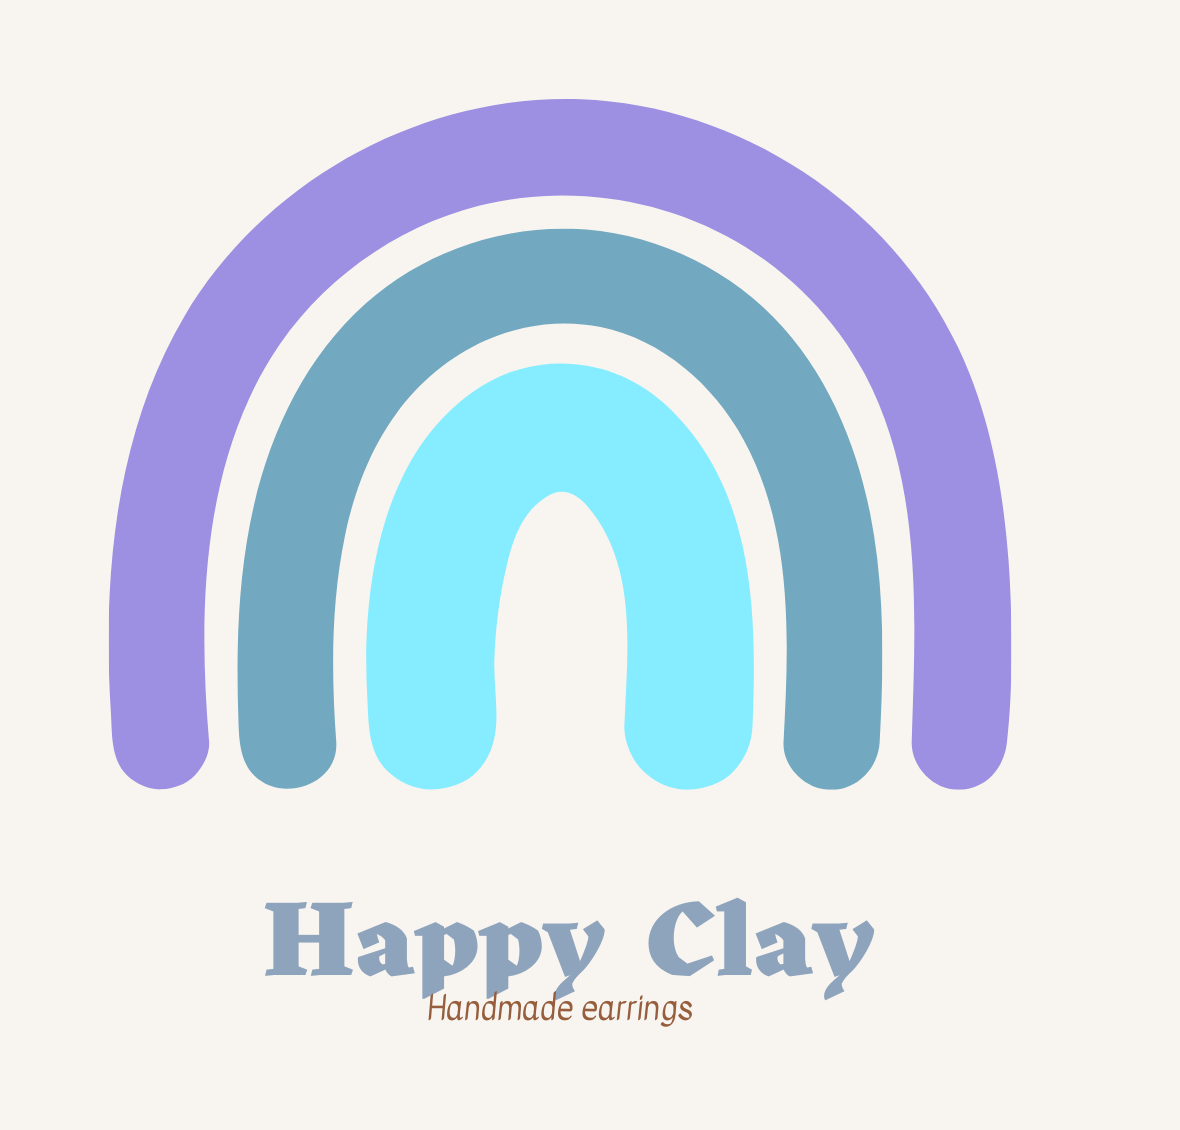 HAPPY CLAY